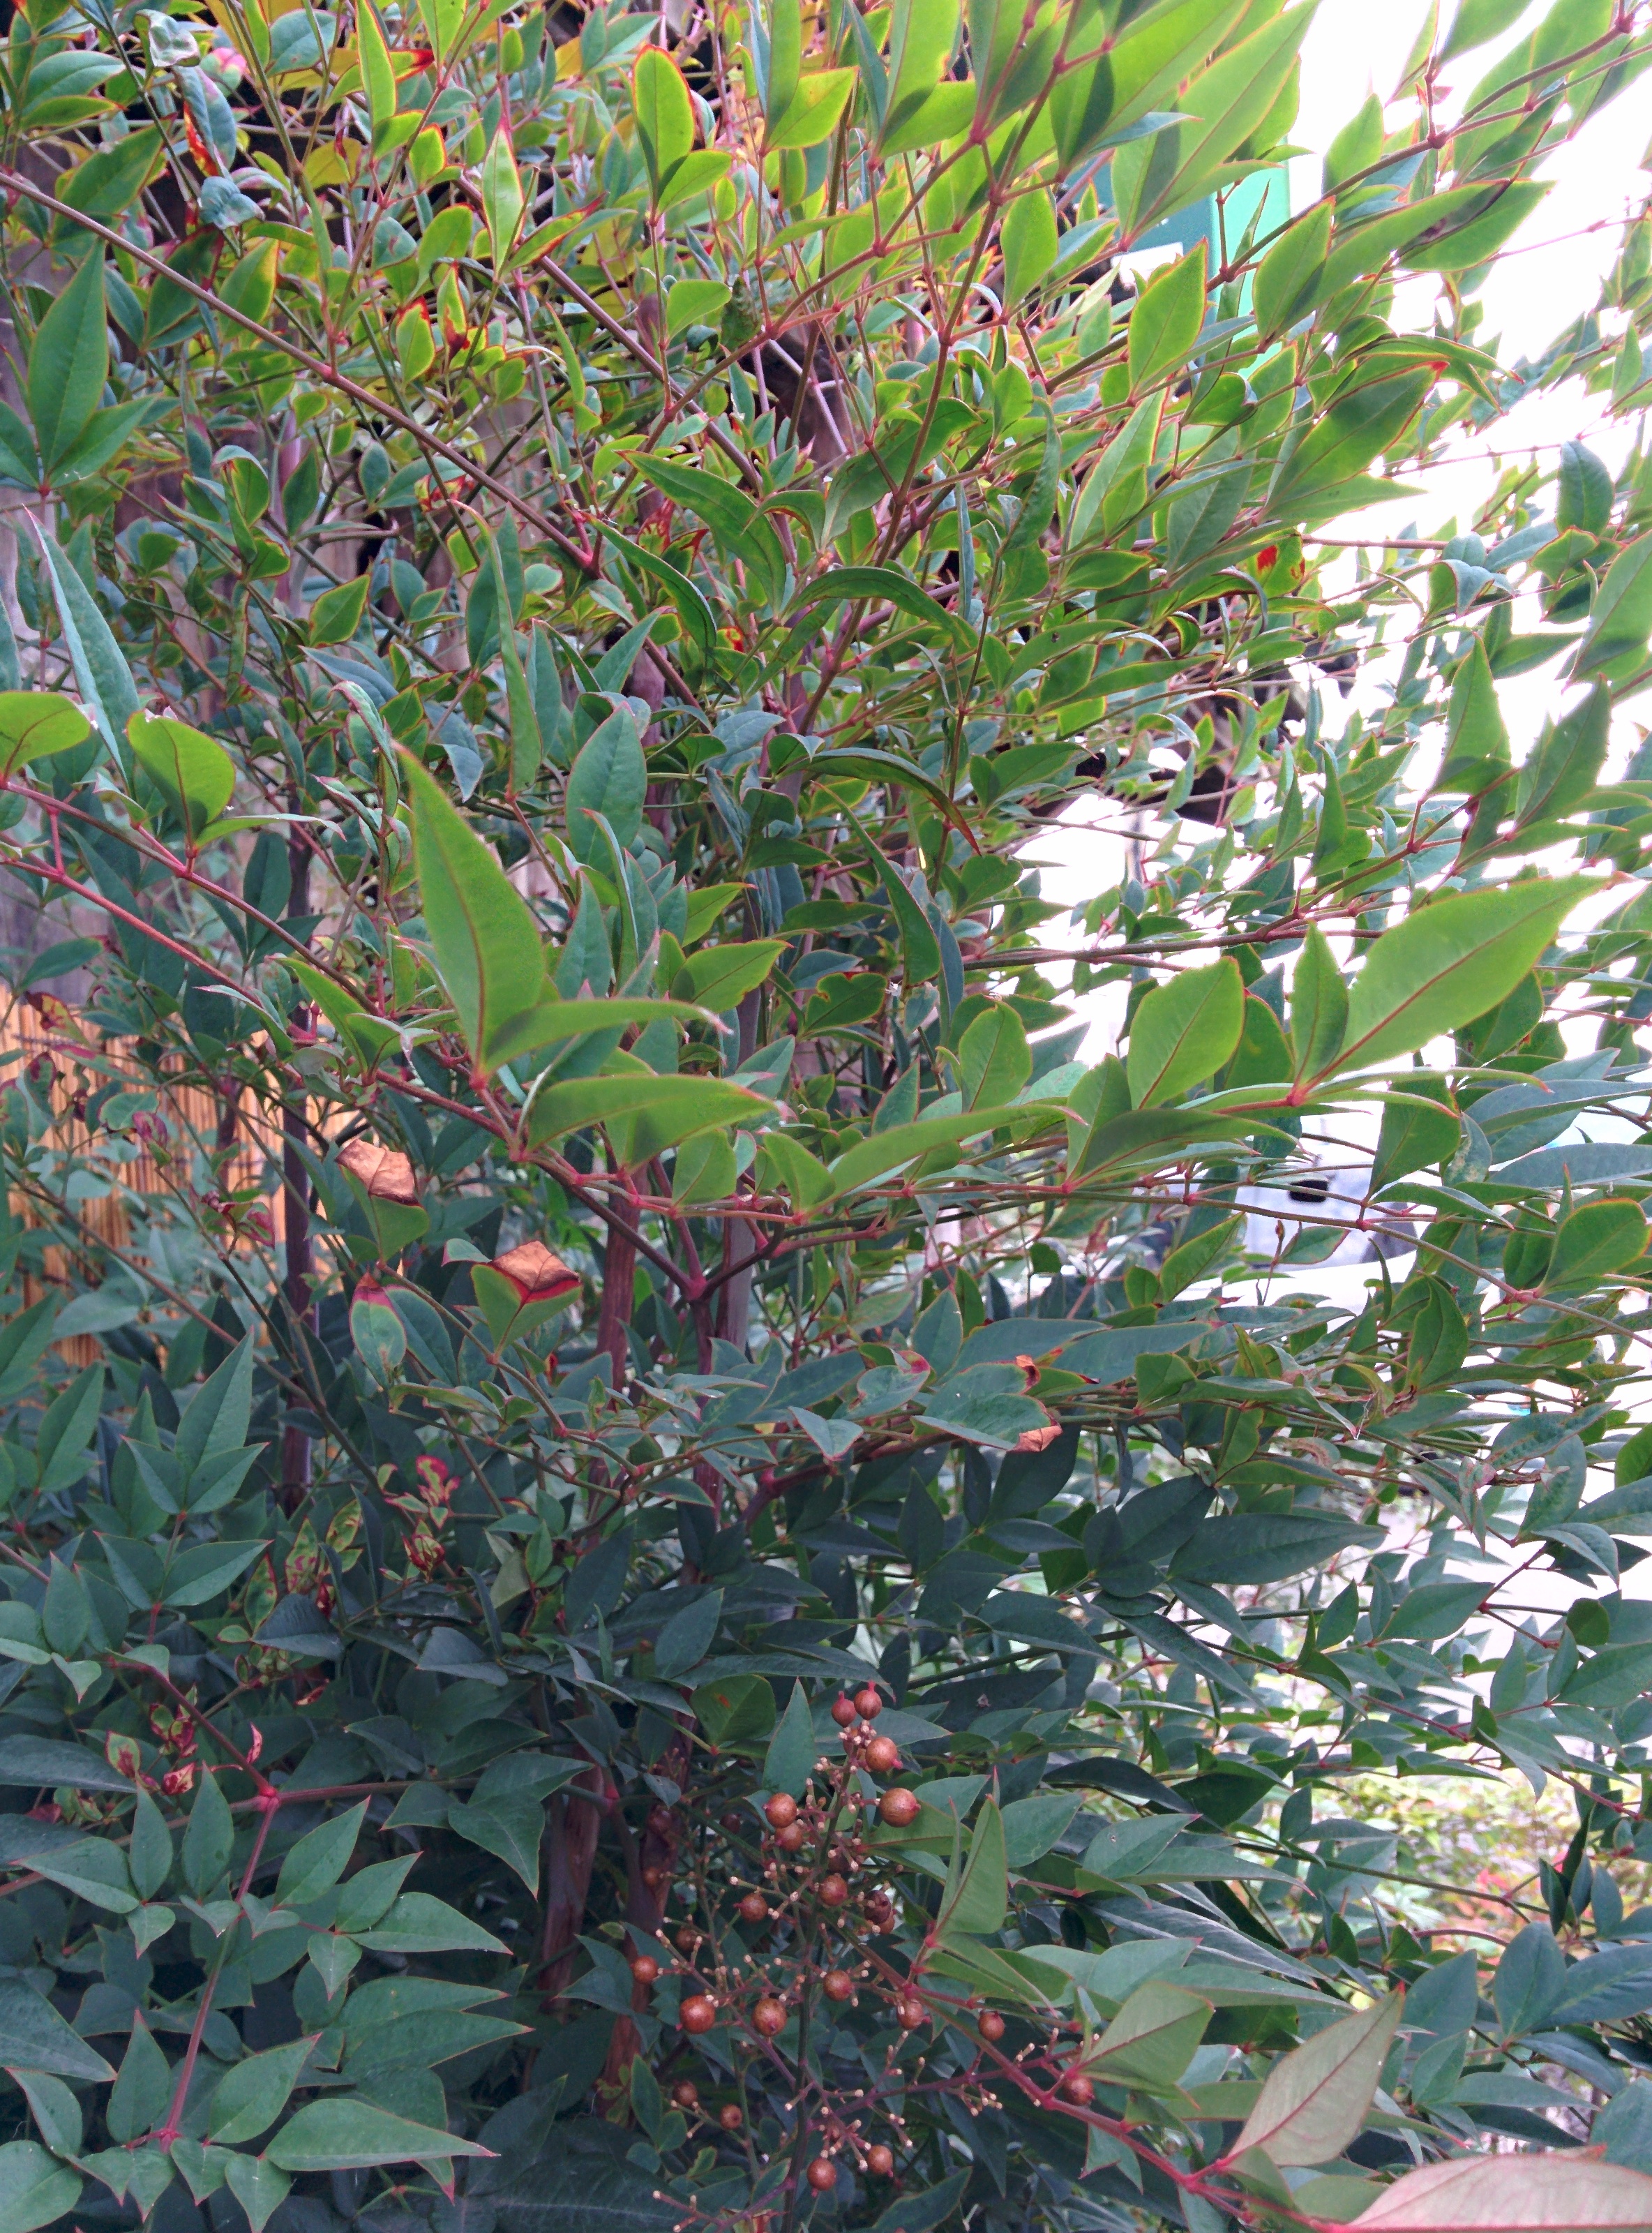 IMG_20150926_162138.jpg 적갈색 열매 송이, 붉은 테두리의 잎, 화분에 심은 정원수, 남천나무